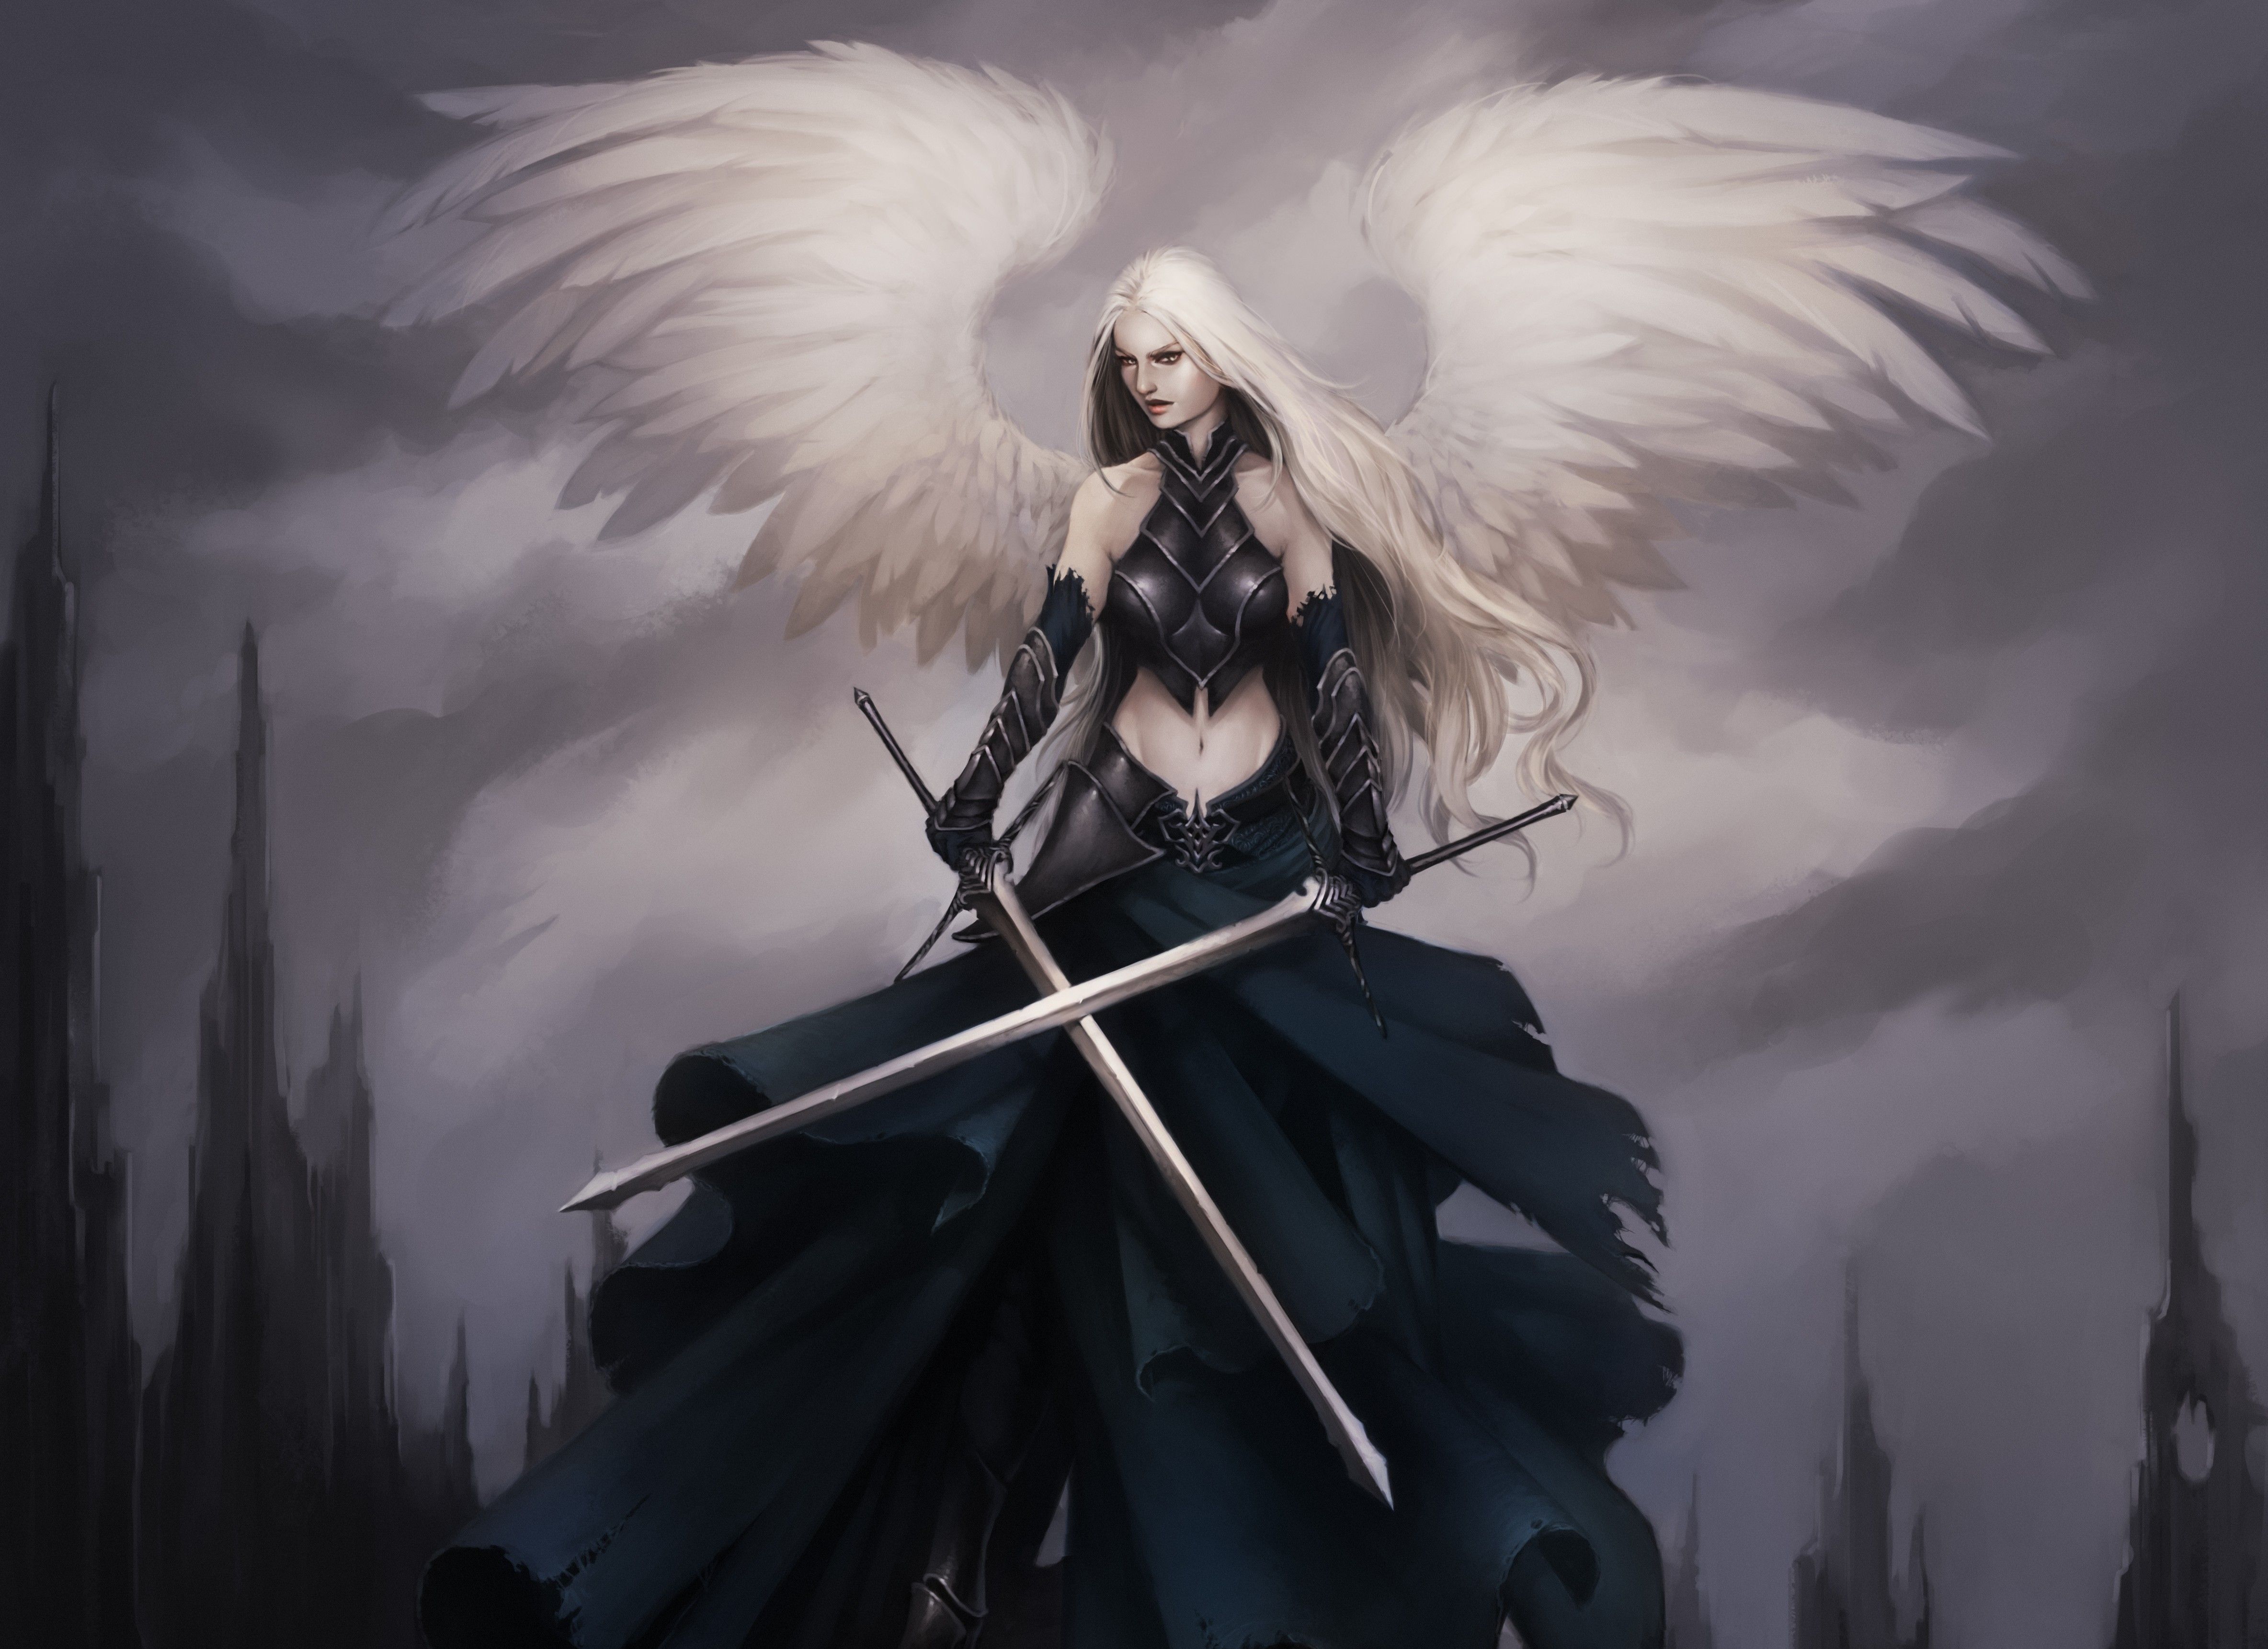 Angel Warrior Sword Wings Armor Fantasy Girl gothic goth wallpaperx3443. Angel warrior, Dark angel, Fantasy girl